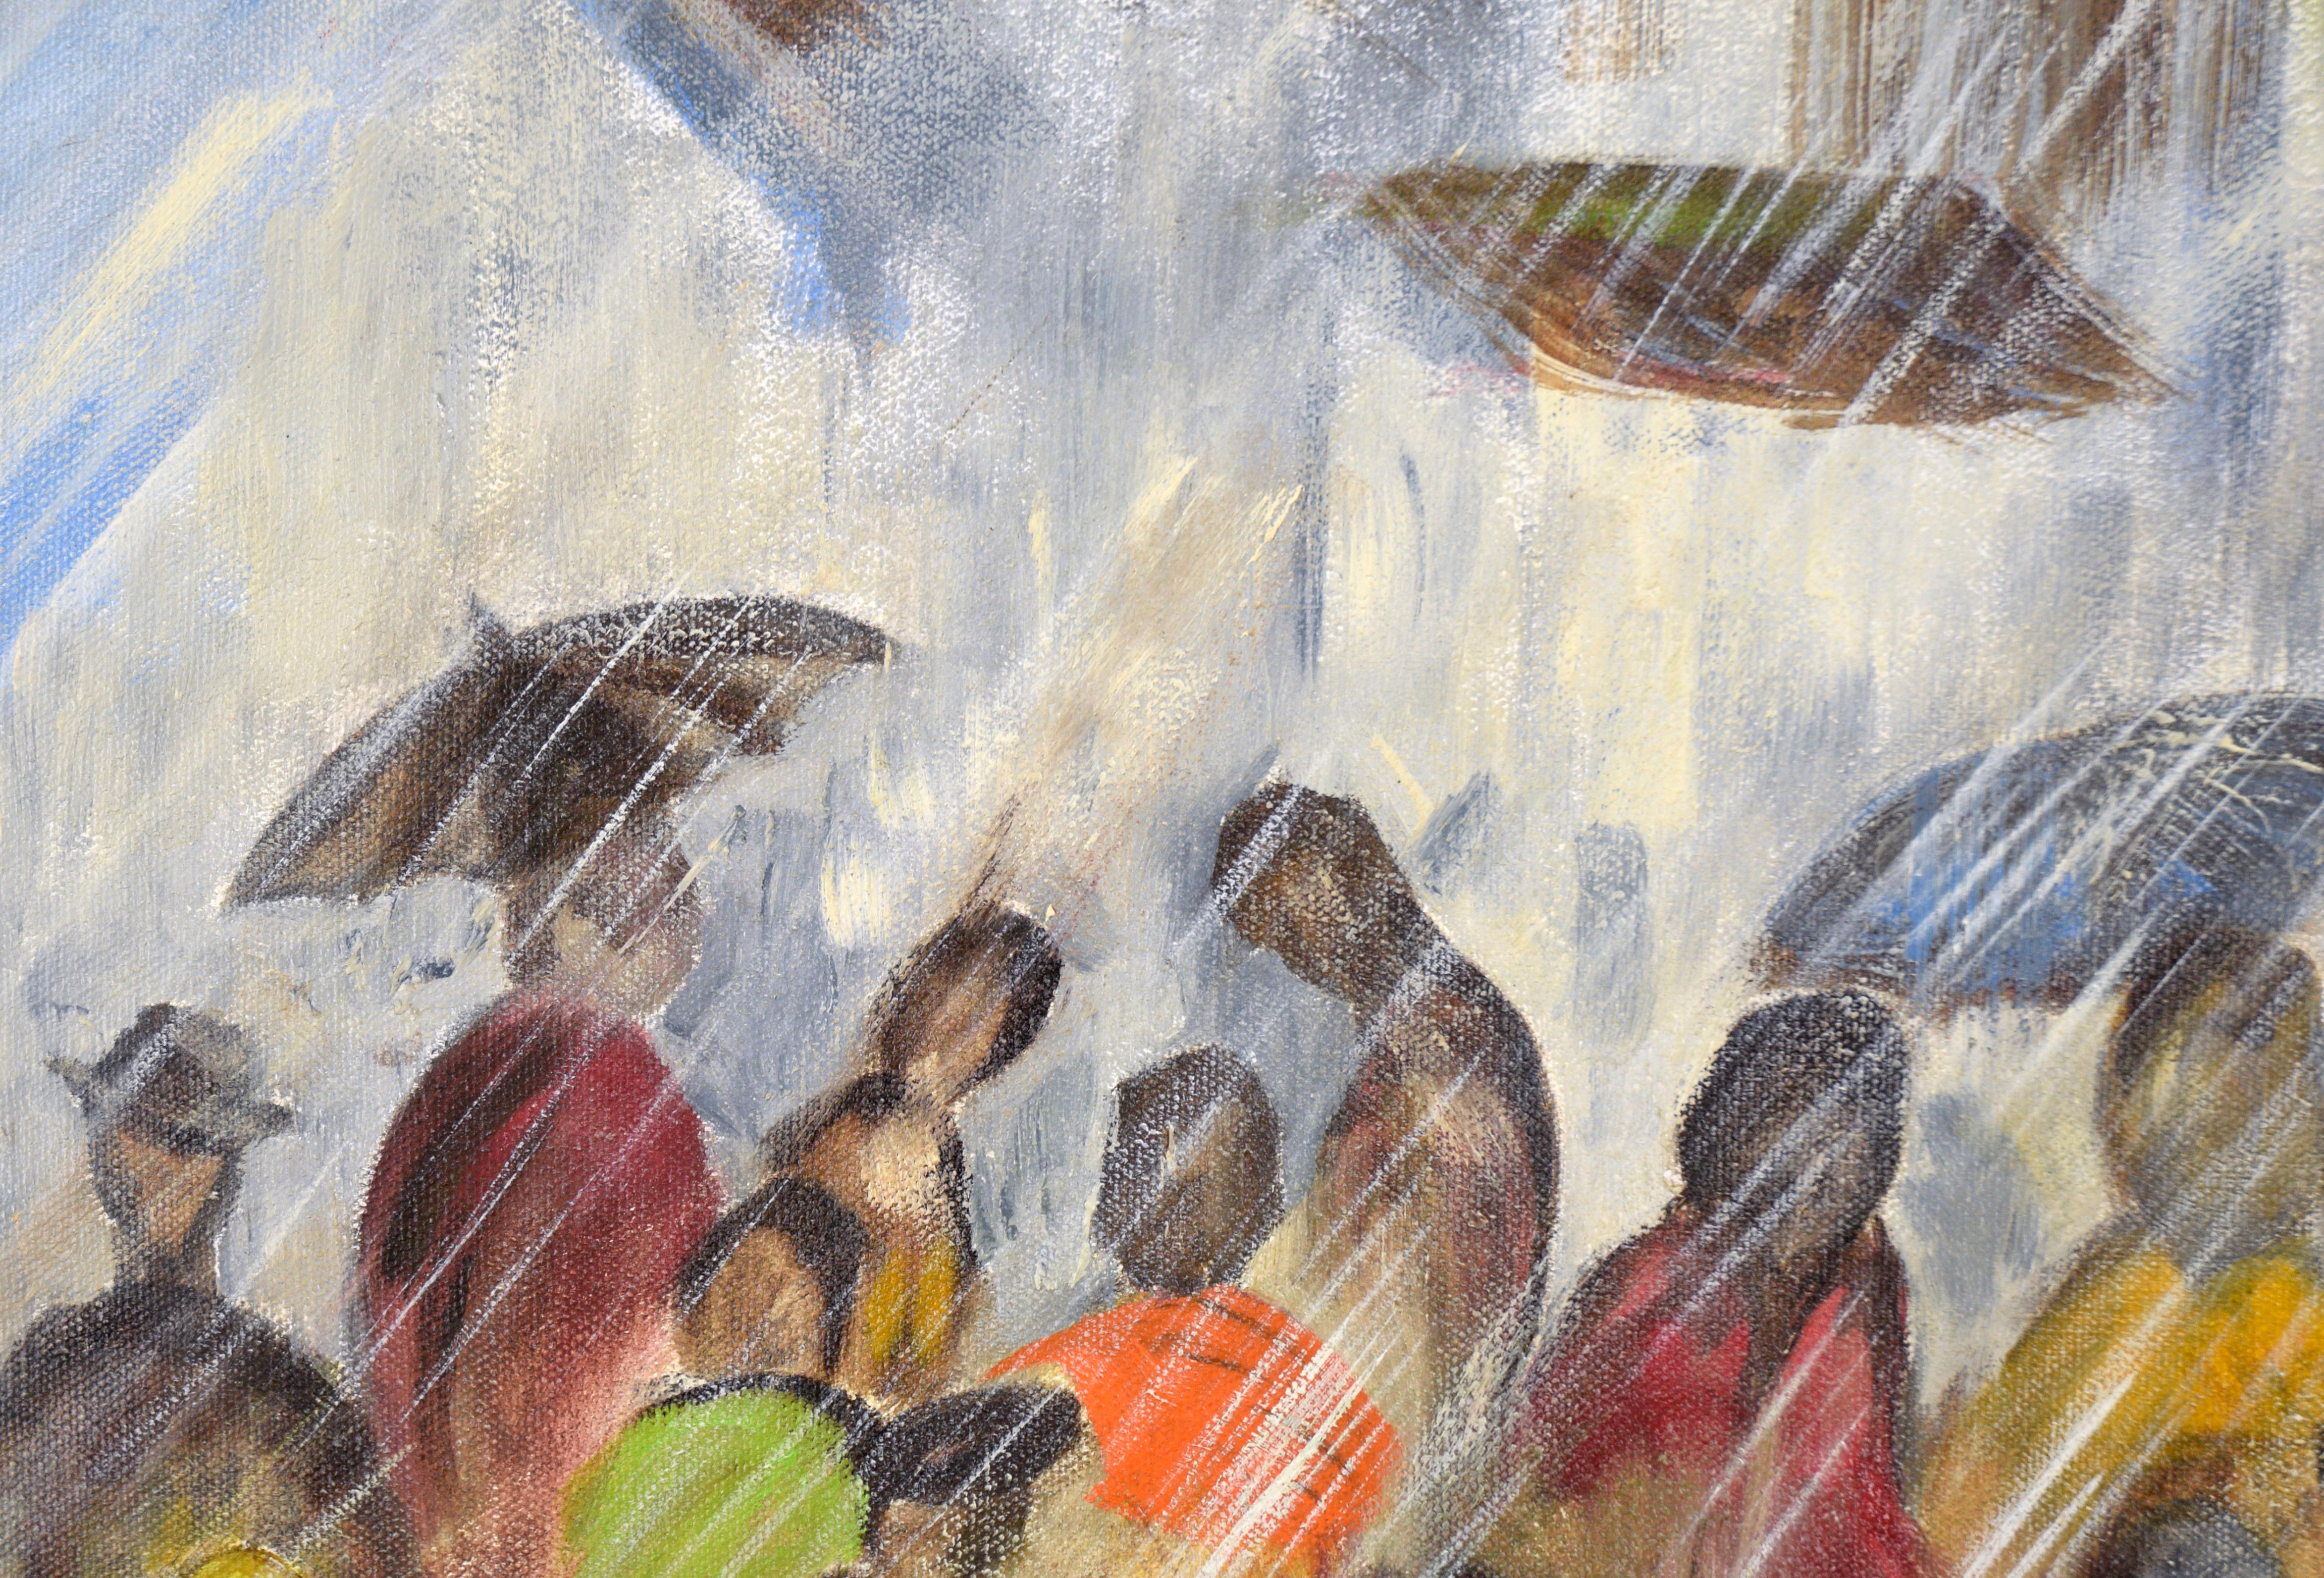 Pouring Down in the Streets - Paysage urbain pluvieux - Impressionnisme américain Painting par Unknown